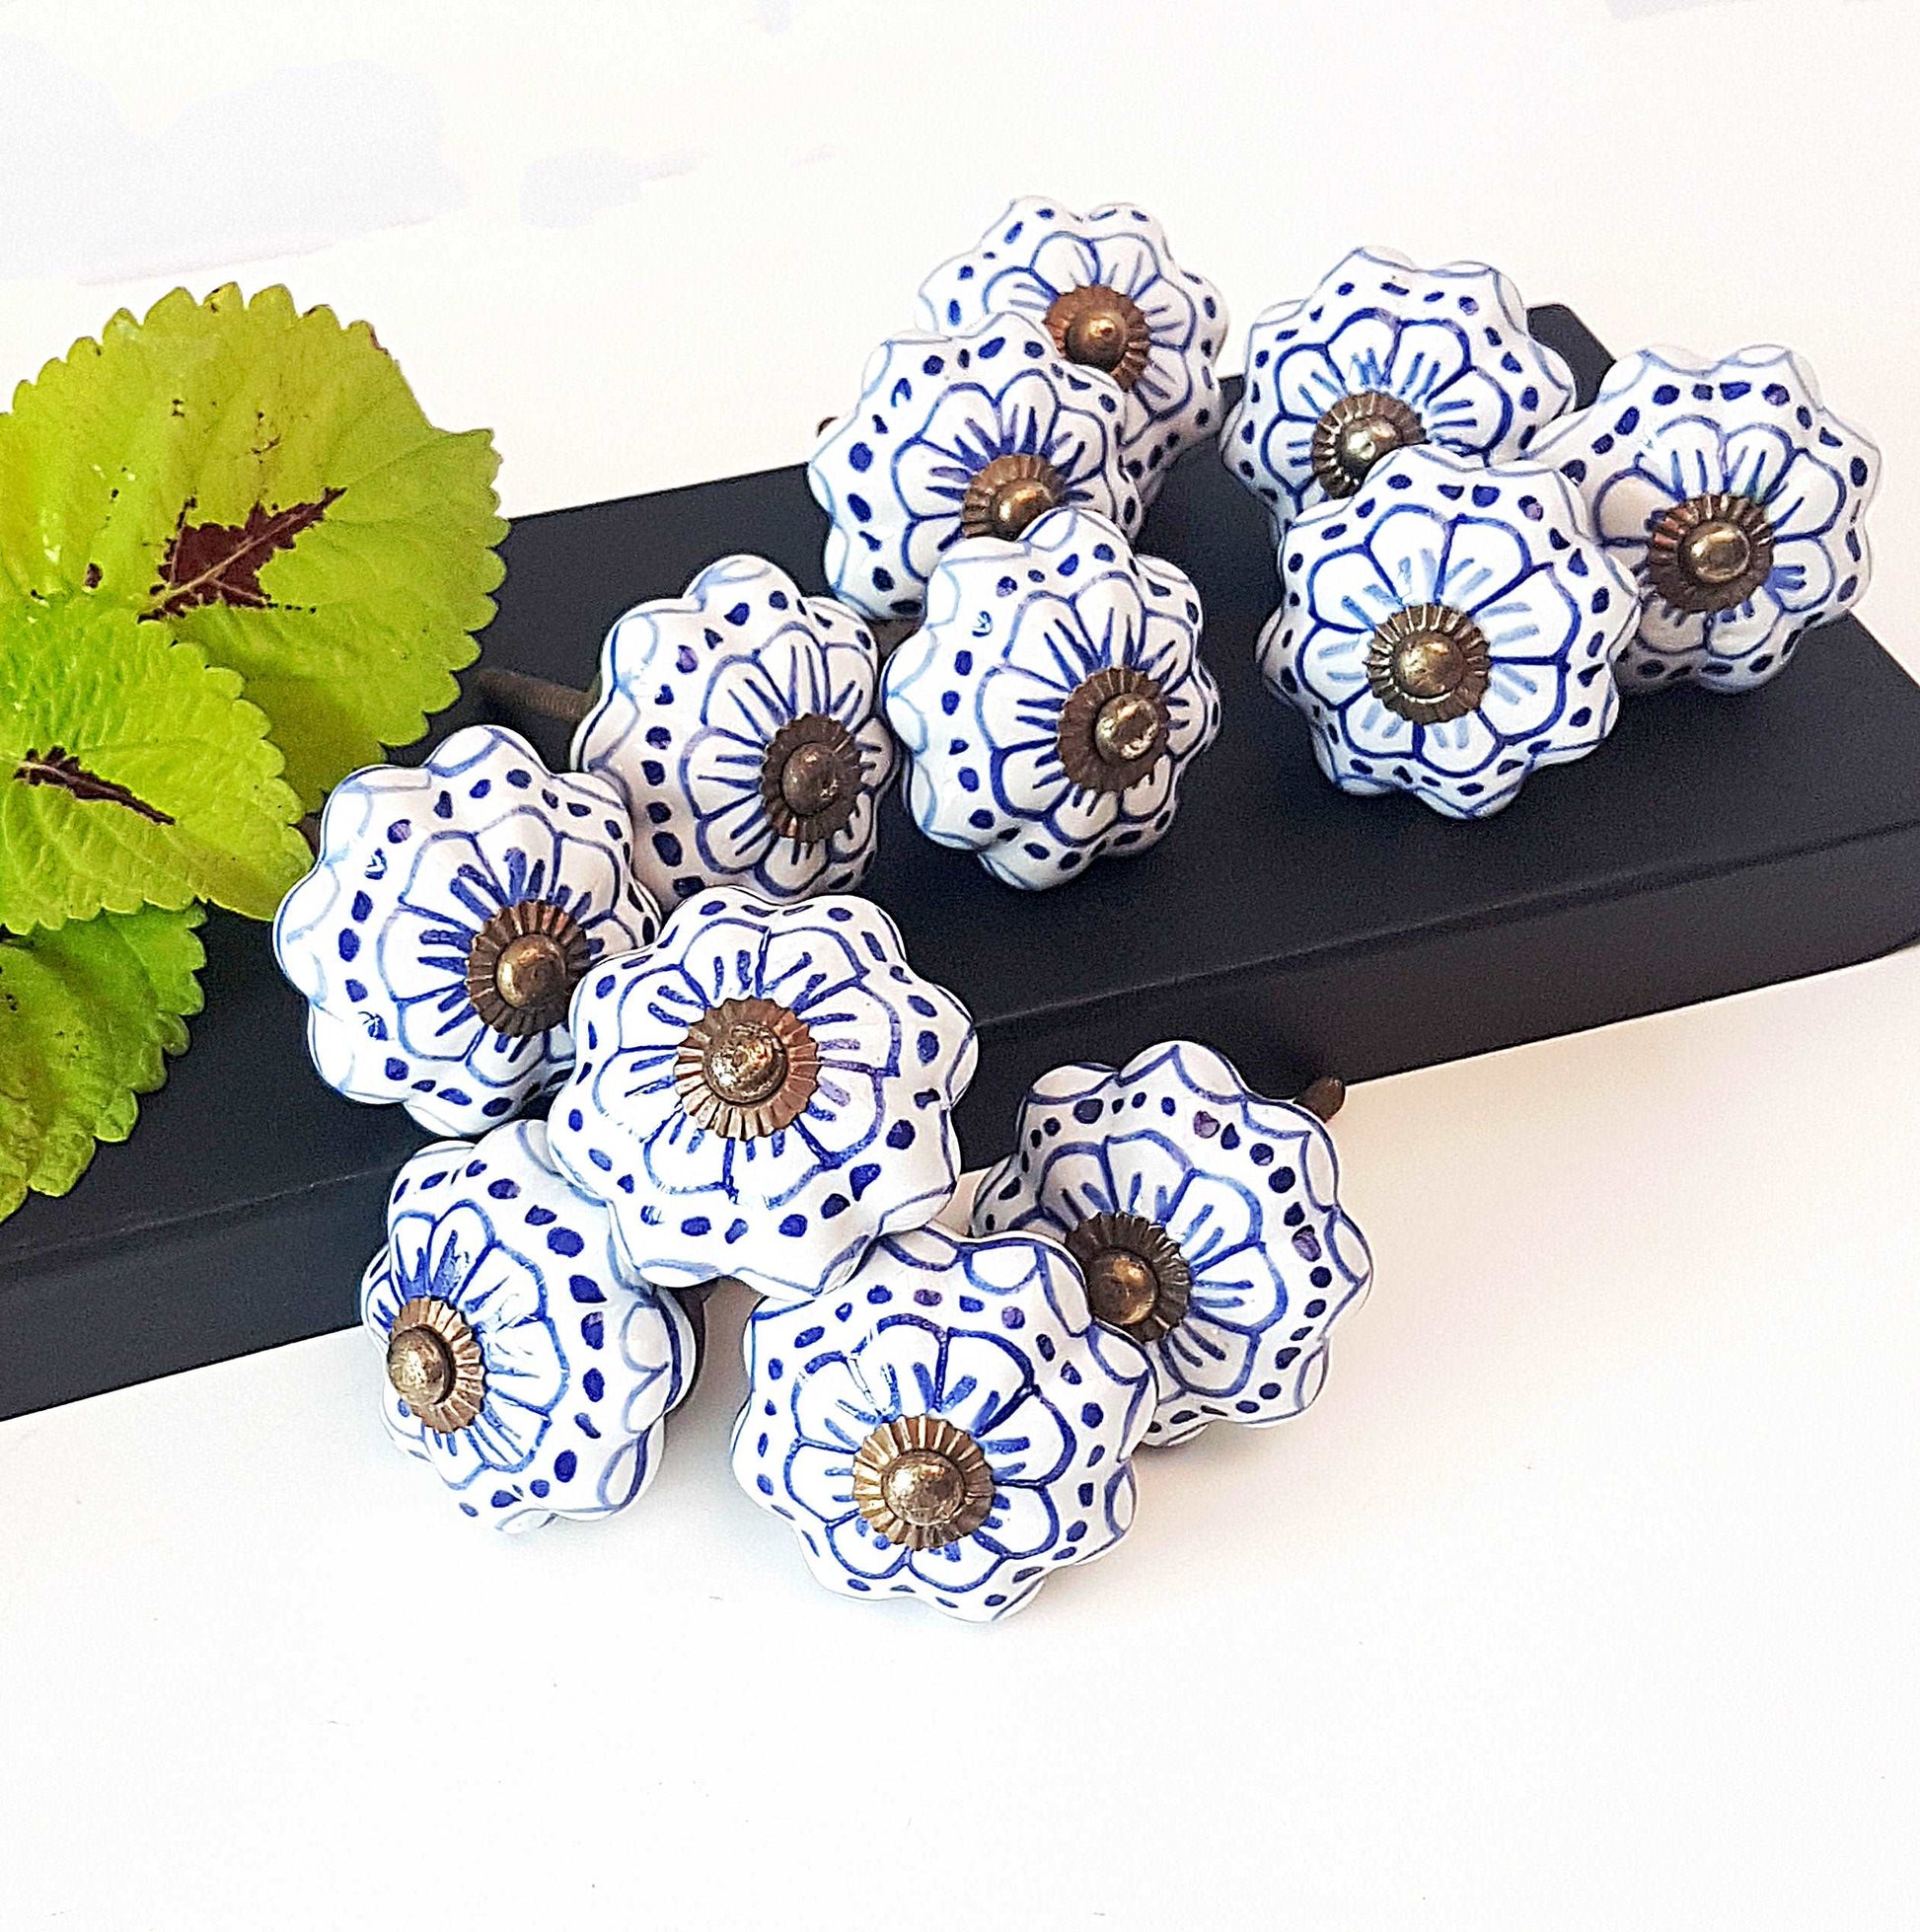 Cabinet knob drawer pull set of 12 in blue & white Delft floral design.